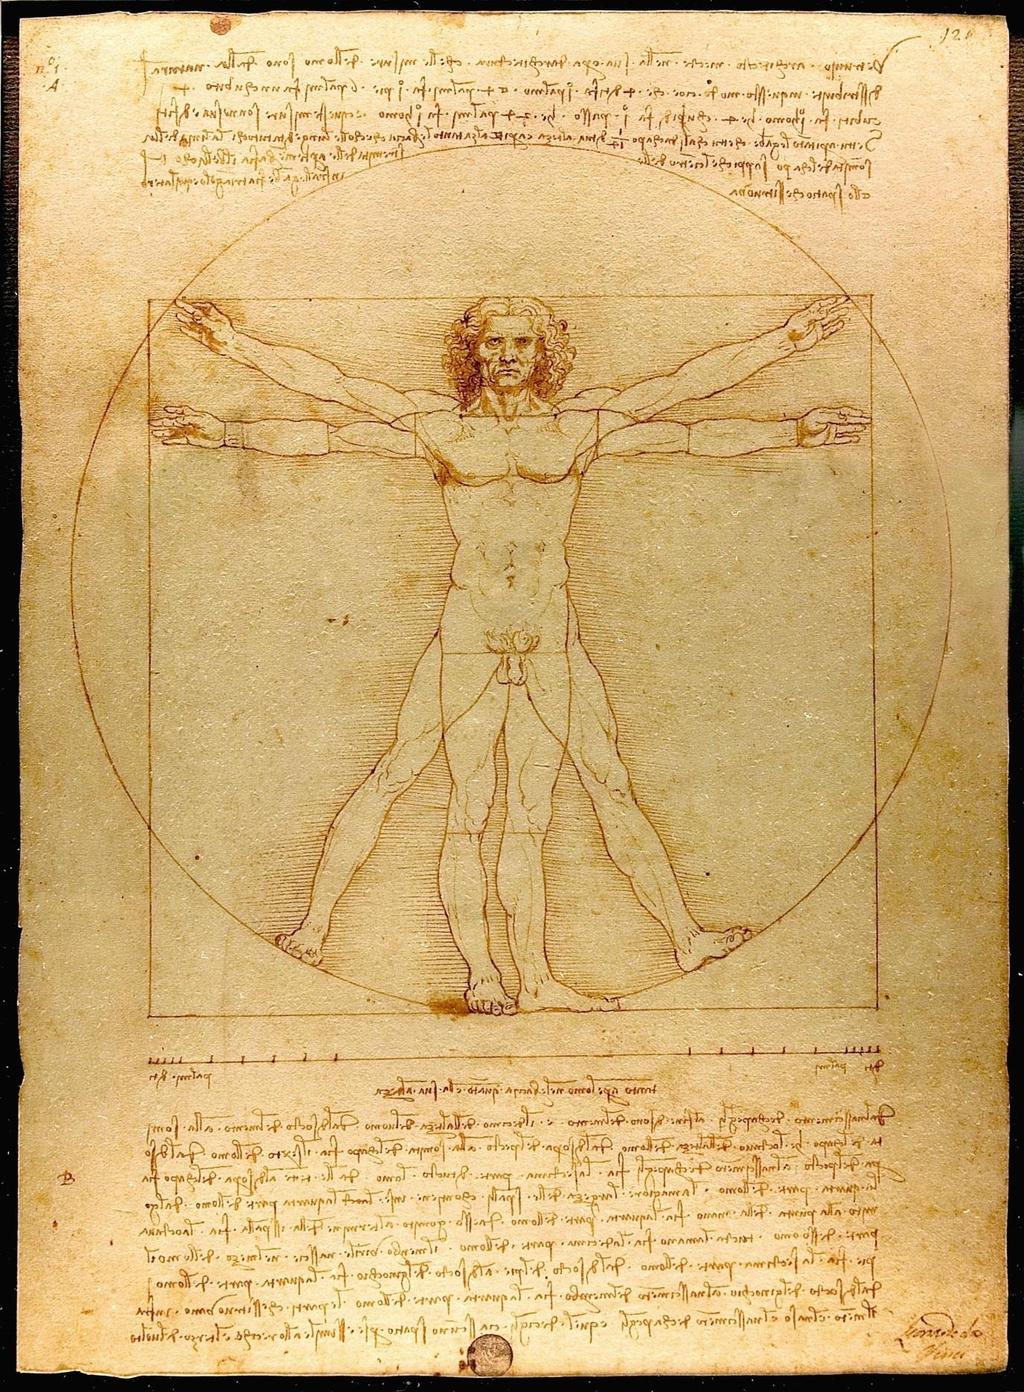 Leonardo Da Vinci, Vitruvian Man (1485 c) man as the measure